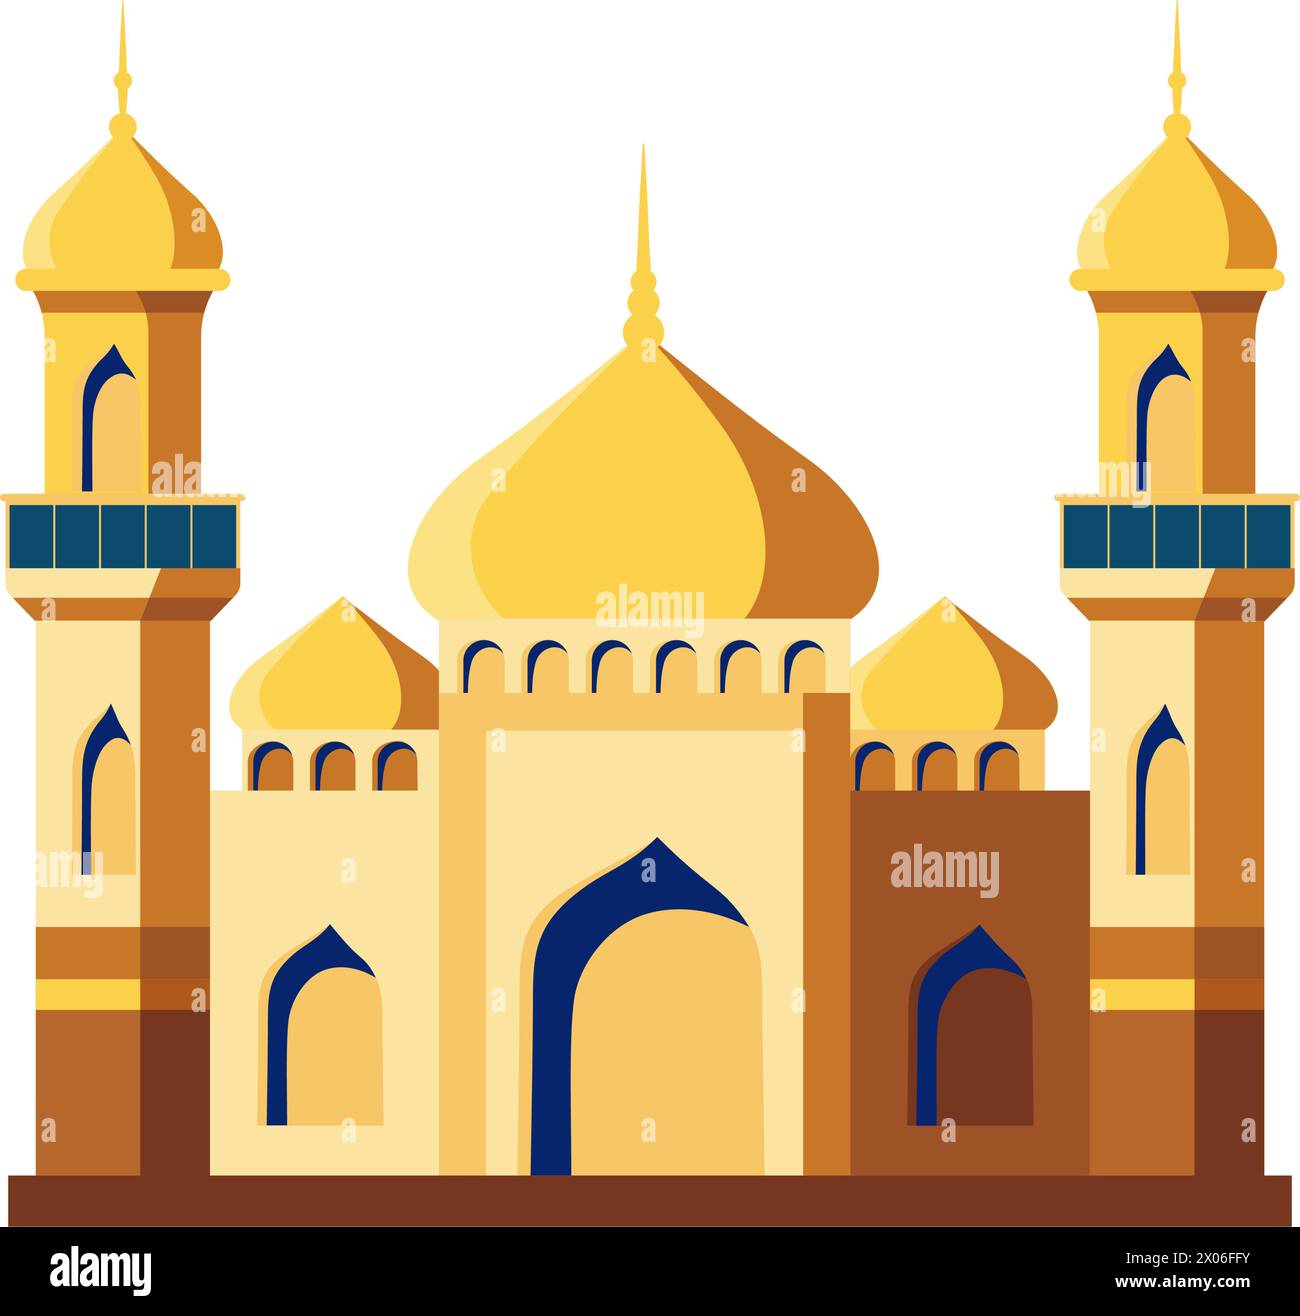 Arabic muslim mosque and minaret. Mosque muslim arabic architecture religious graphics. Prayer building islamic culture. Flat style, sacred Stock Vector